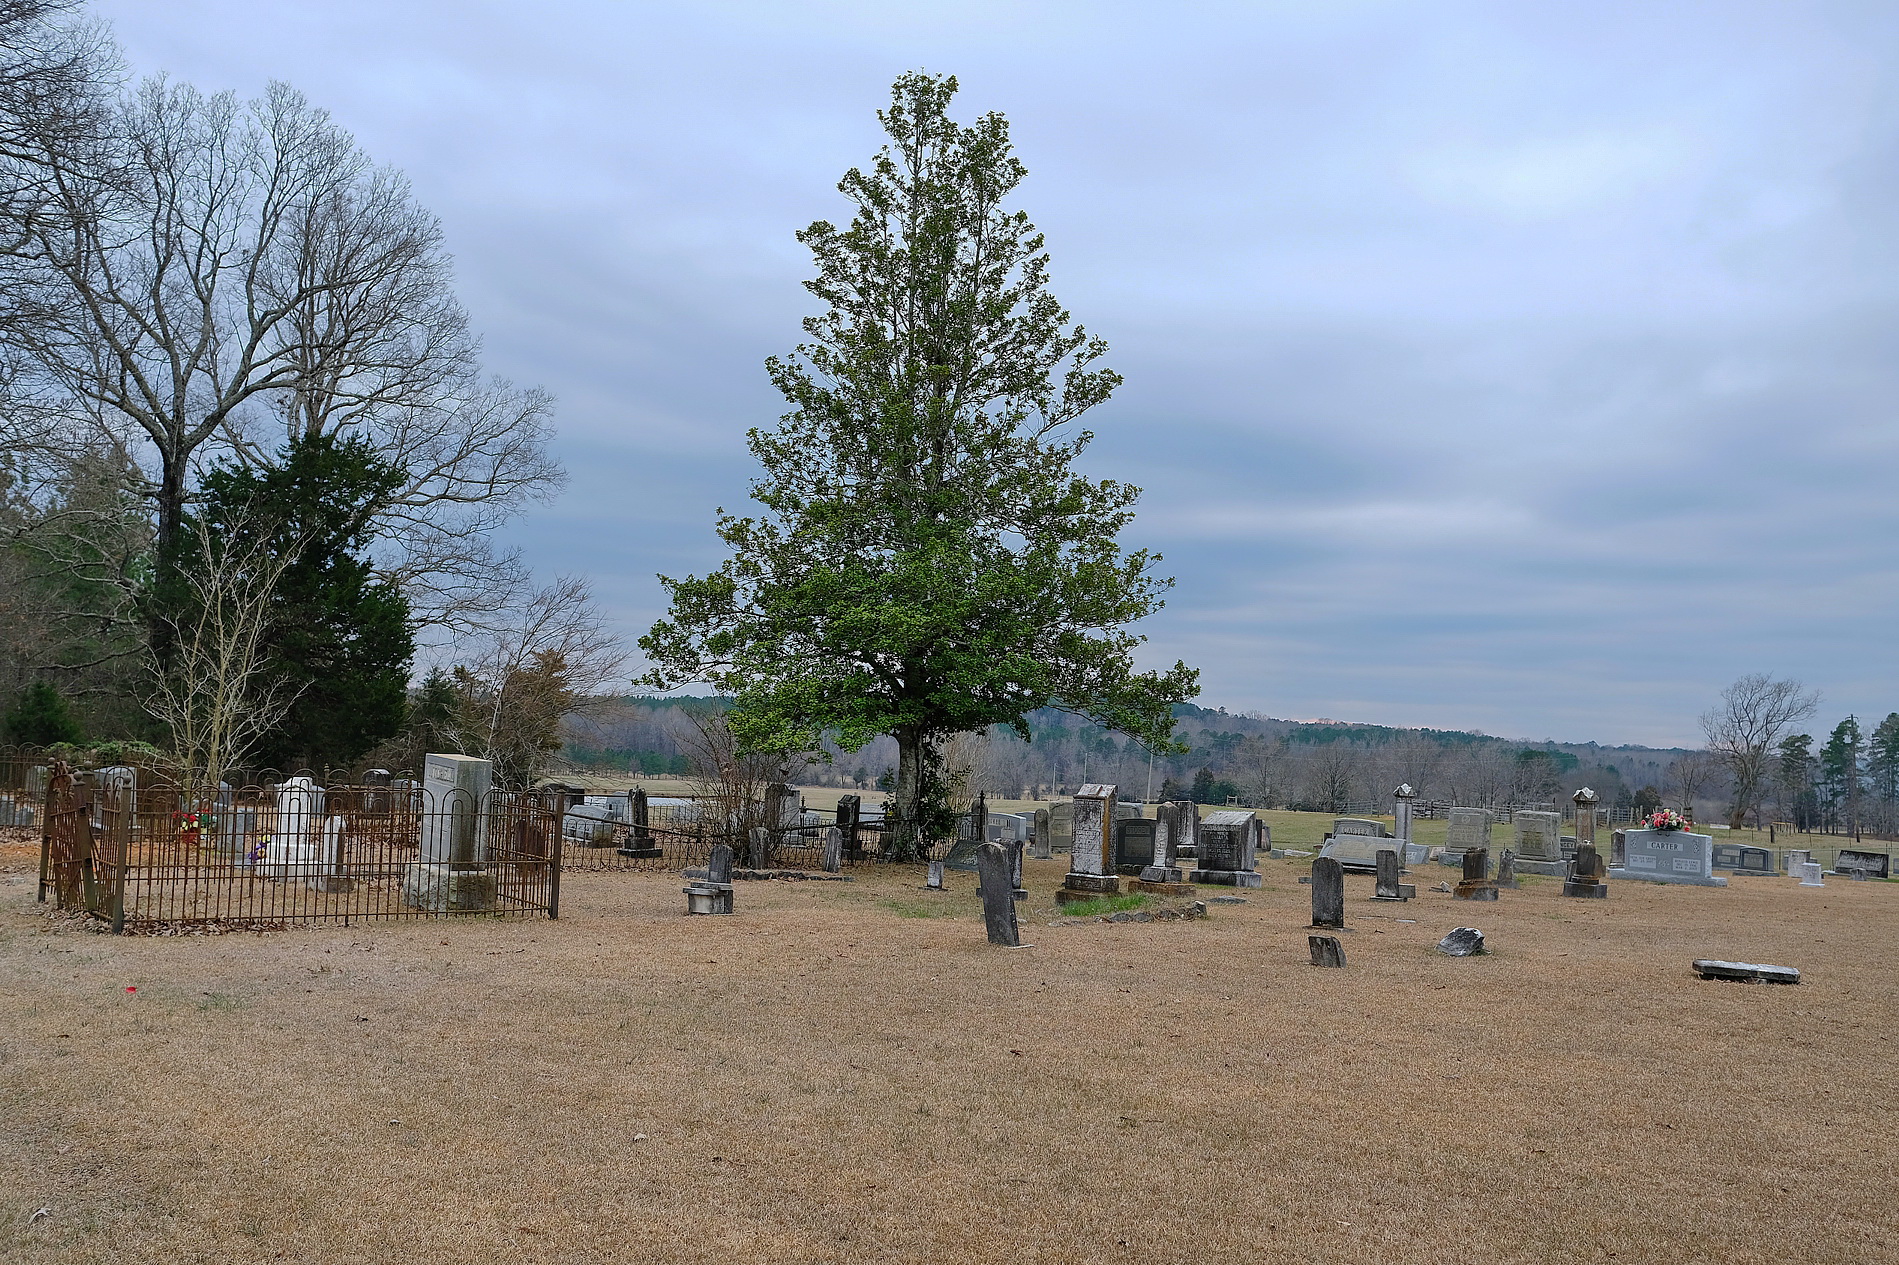  Wier Chapel Cemetery looking west from Highway 370 